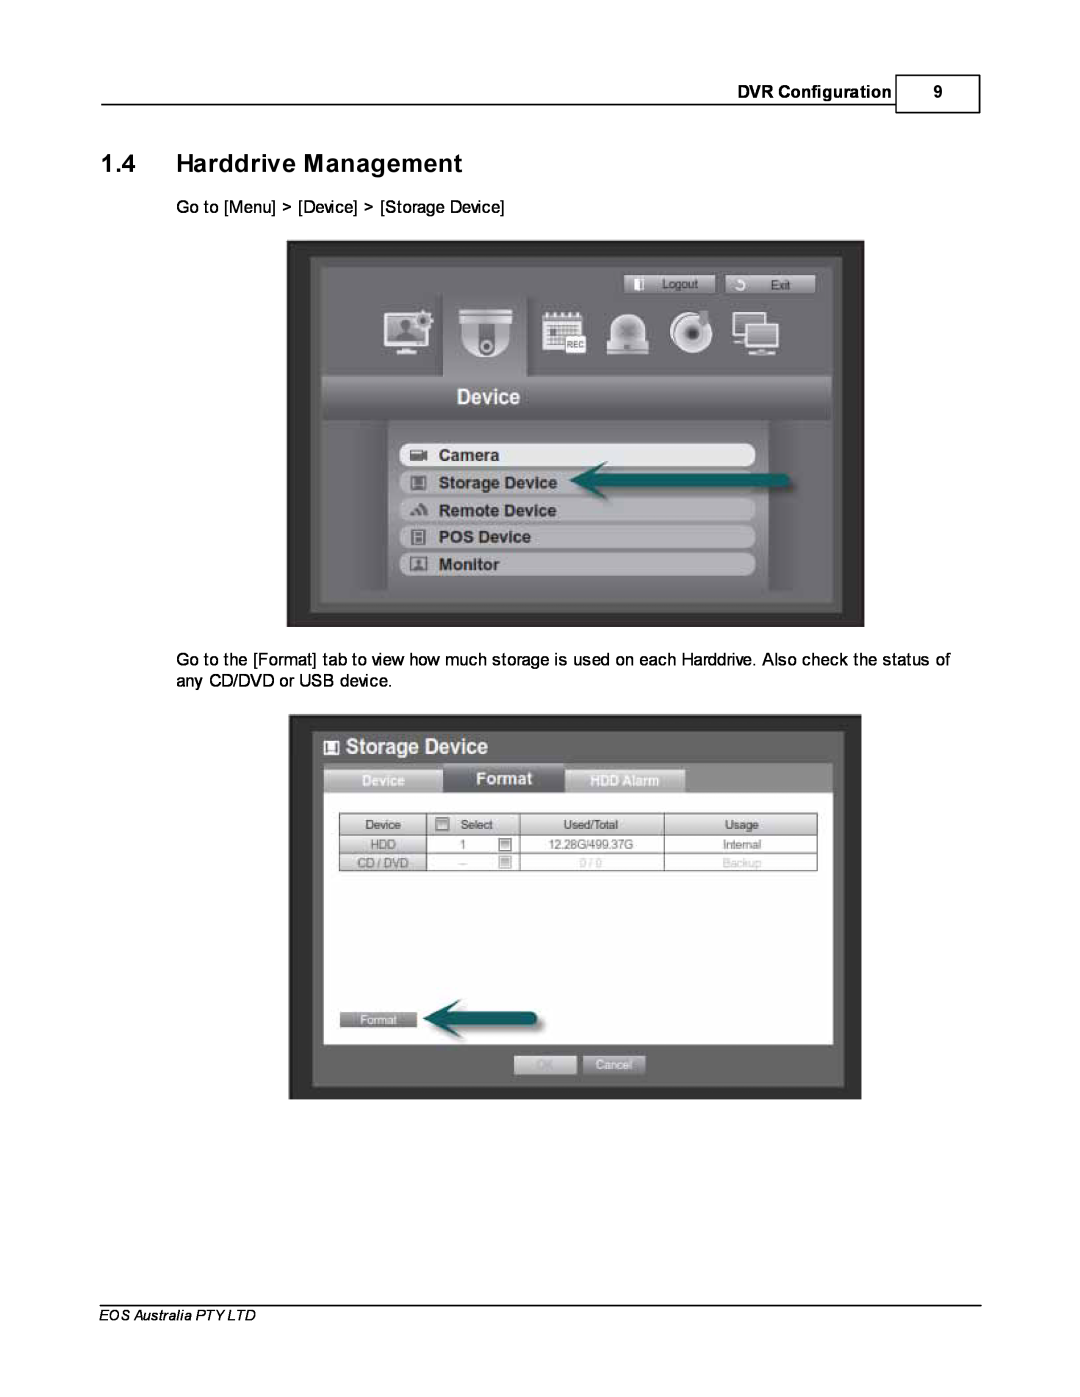 Samsung SDR4200 manual 1.4Harddrive Management, DVR Configuration, Go to Menu Device Storage Device 